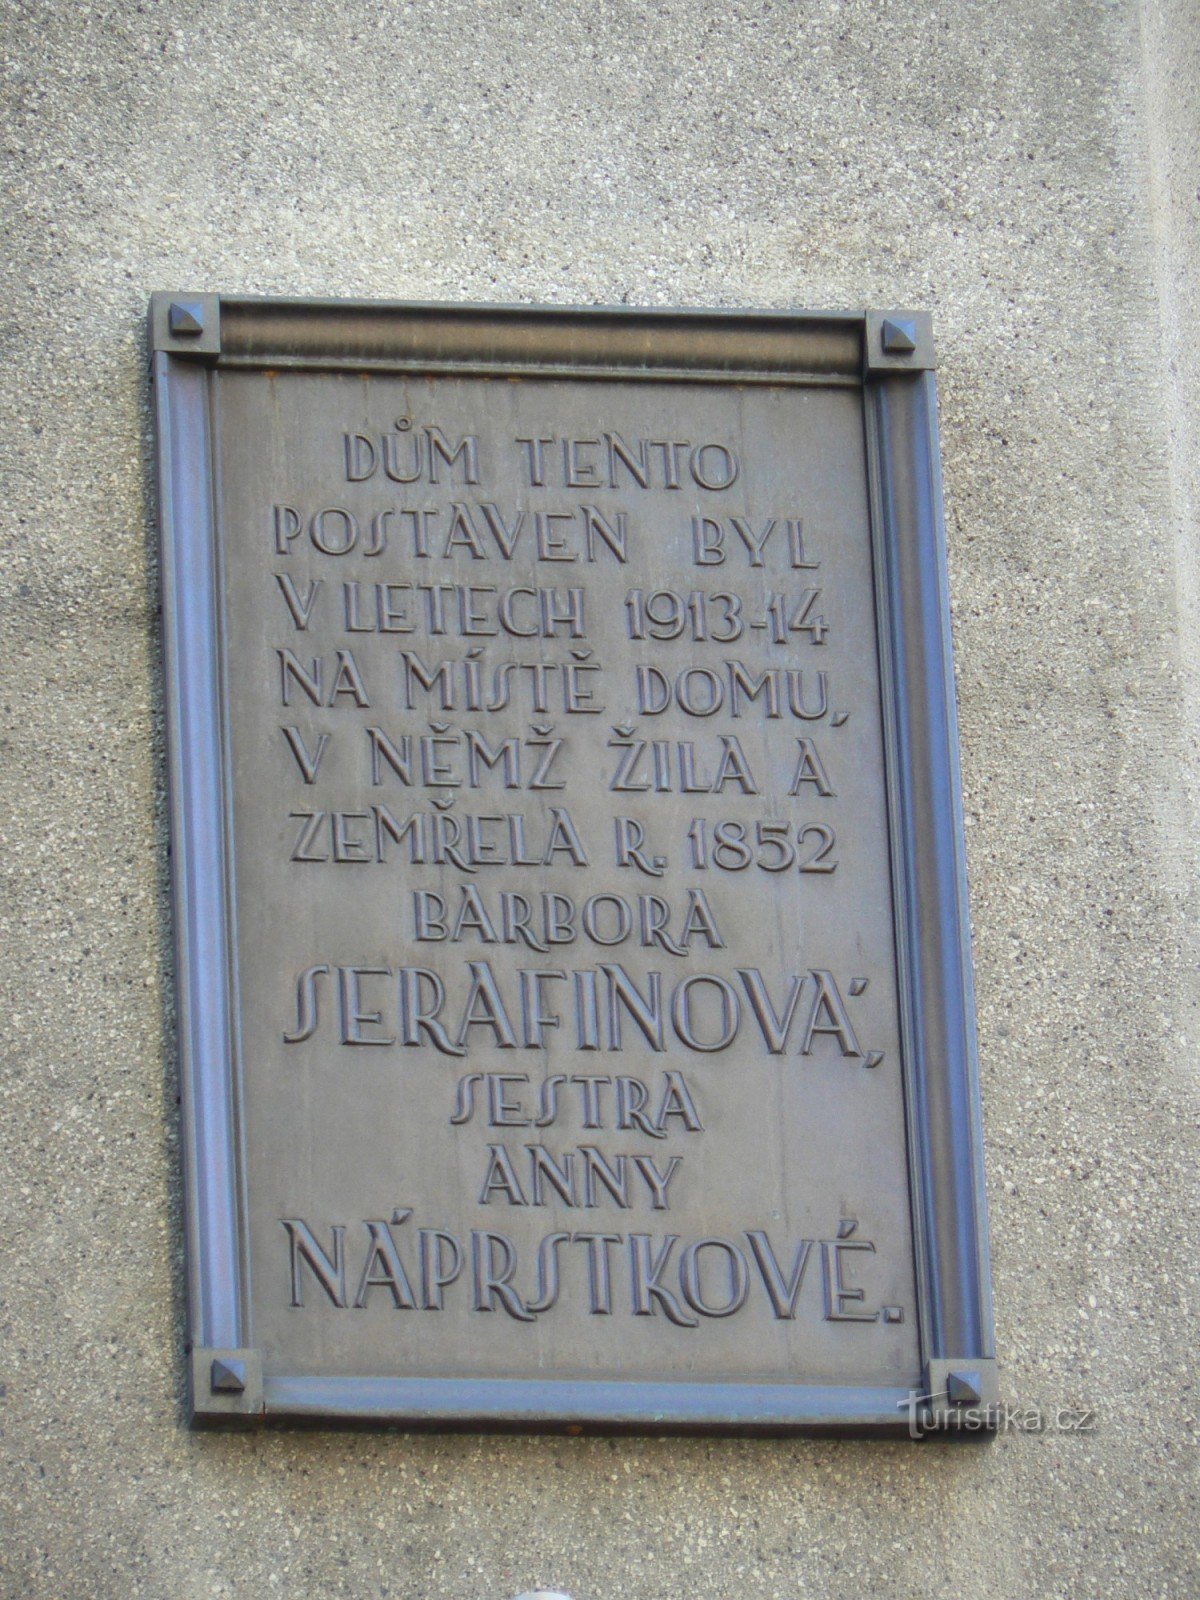 Placa comemorativa de Barbora Serafinová